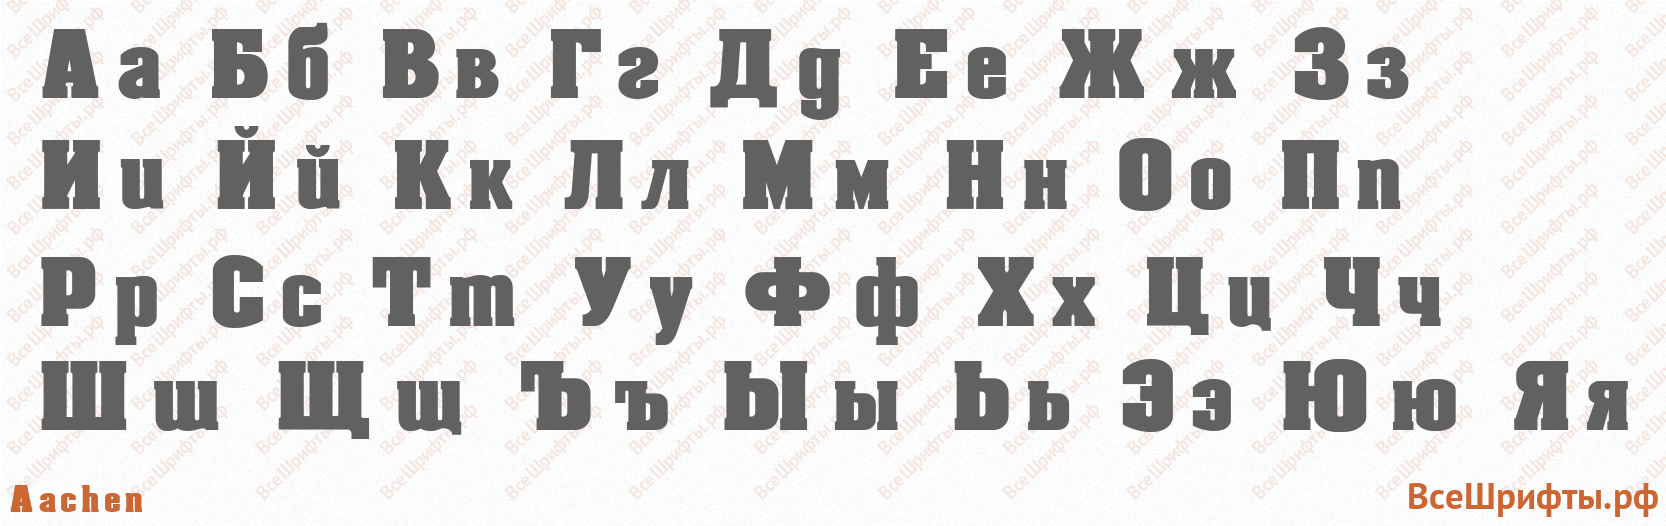 Шрифт Aachen с русскими буквами